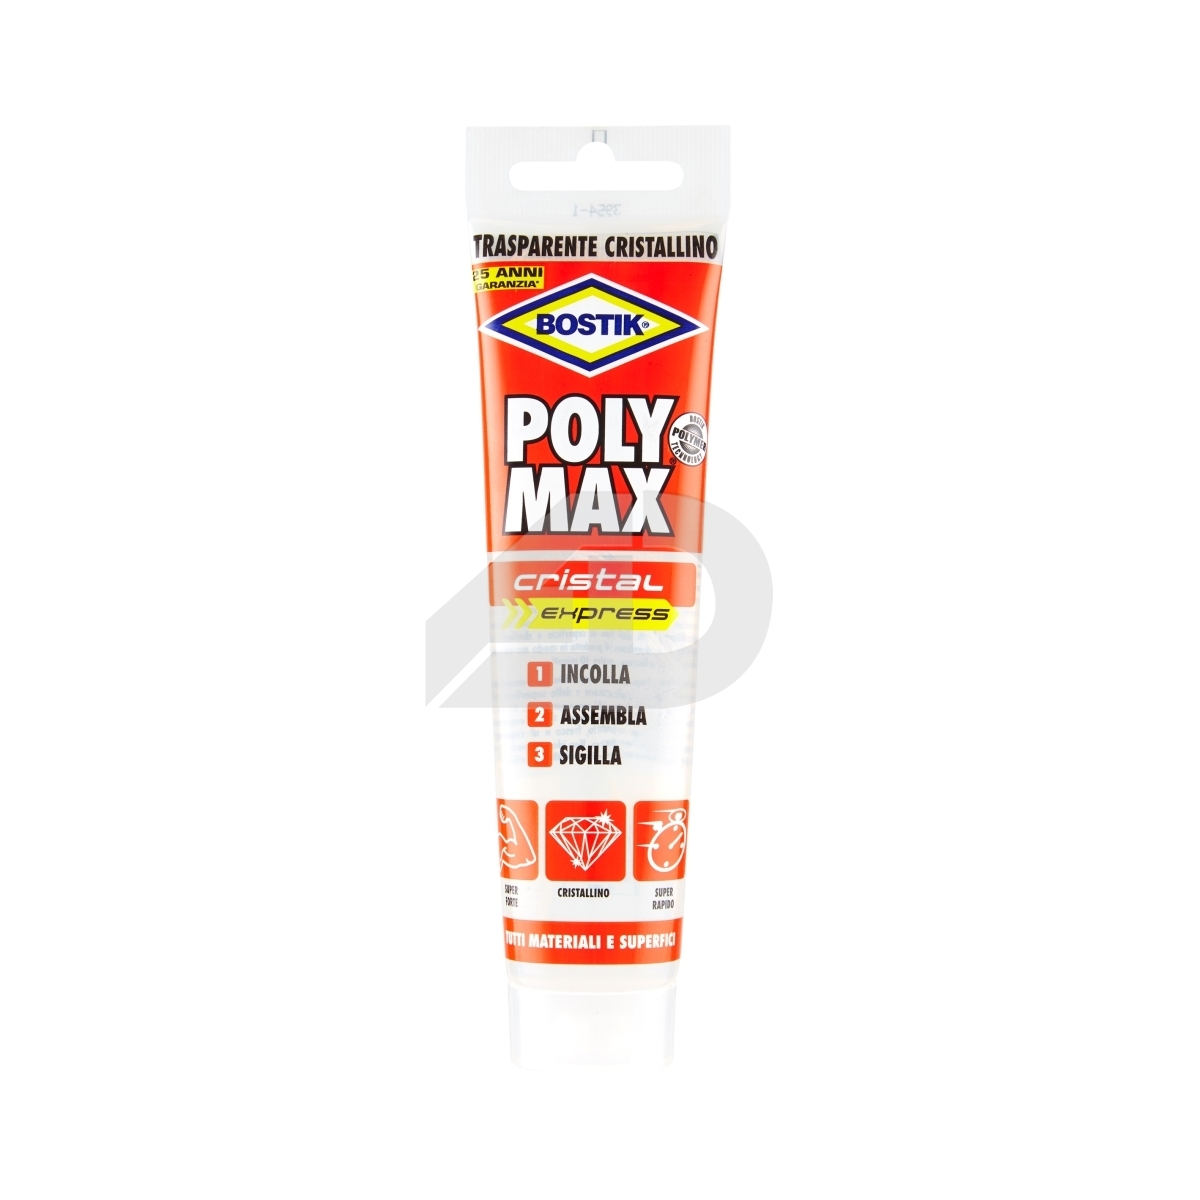 Colla universale Bostik Poly Max Cristal Express 115 grammi D2559